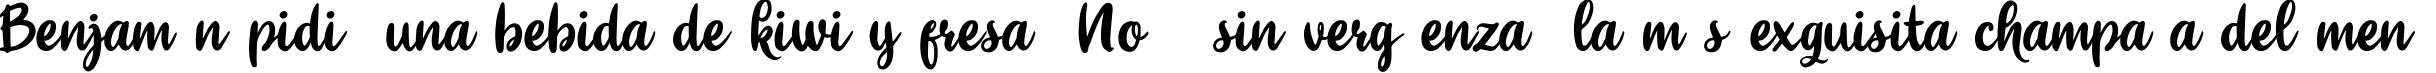 Пример написания шрифтом Shitoberry текста на испанском